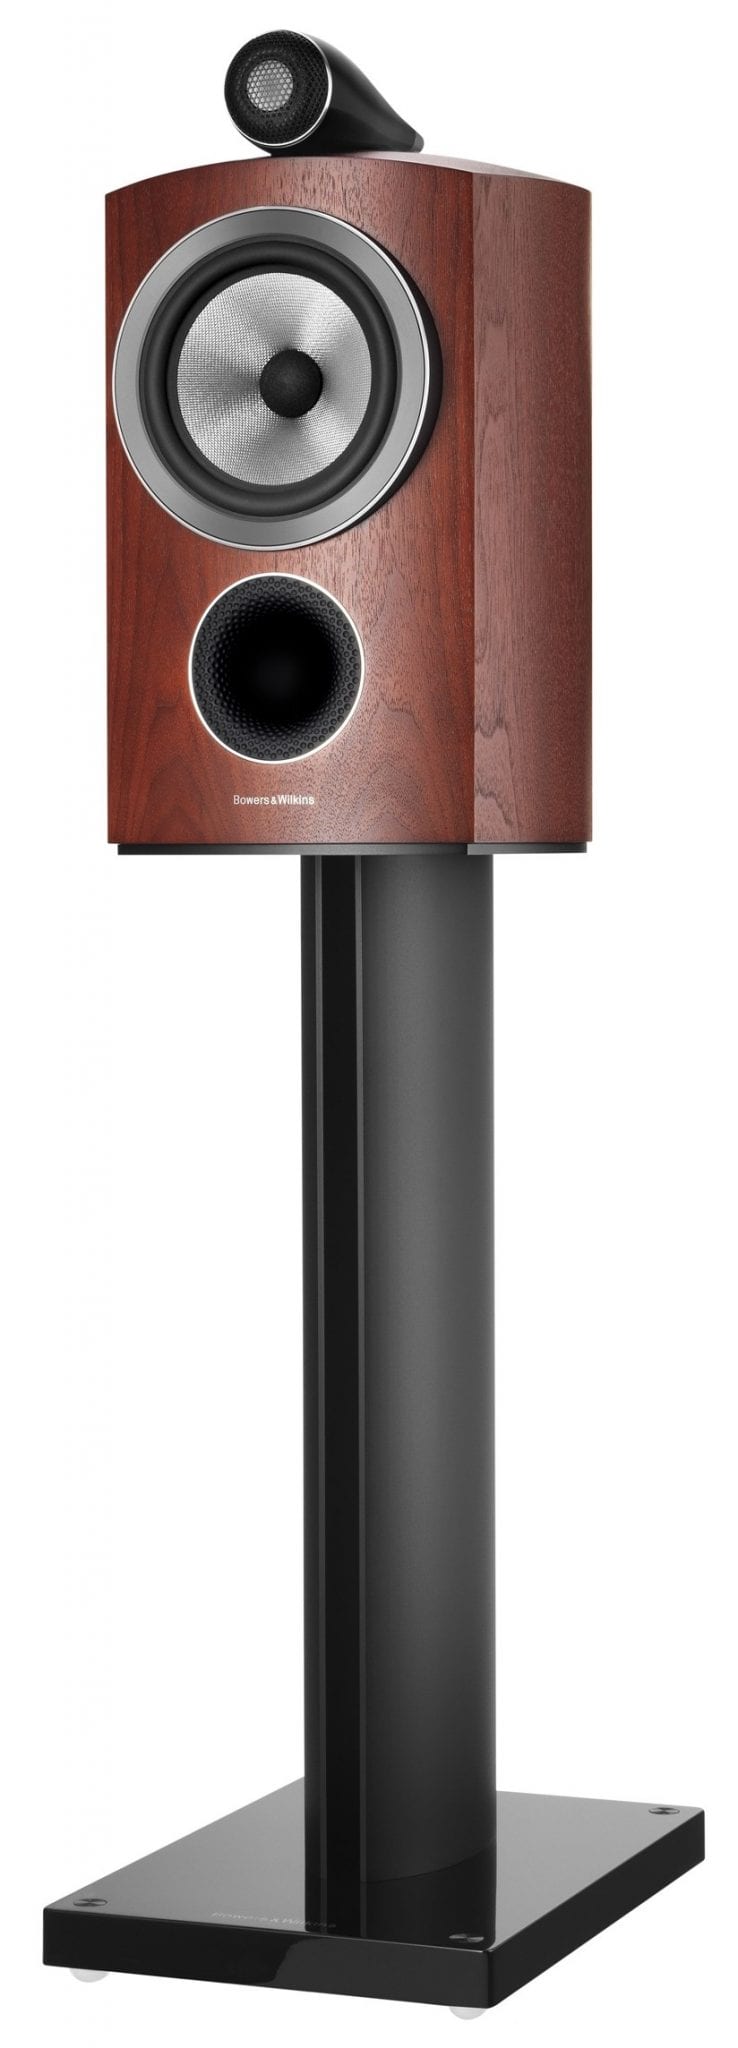 Bowers & Wilkins 805 D3 rosenut - Boekenplank speaker